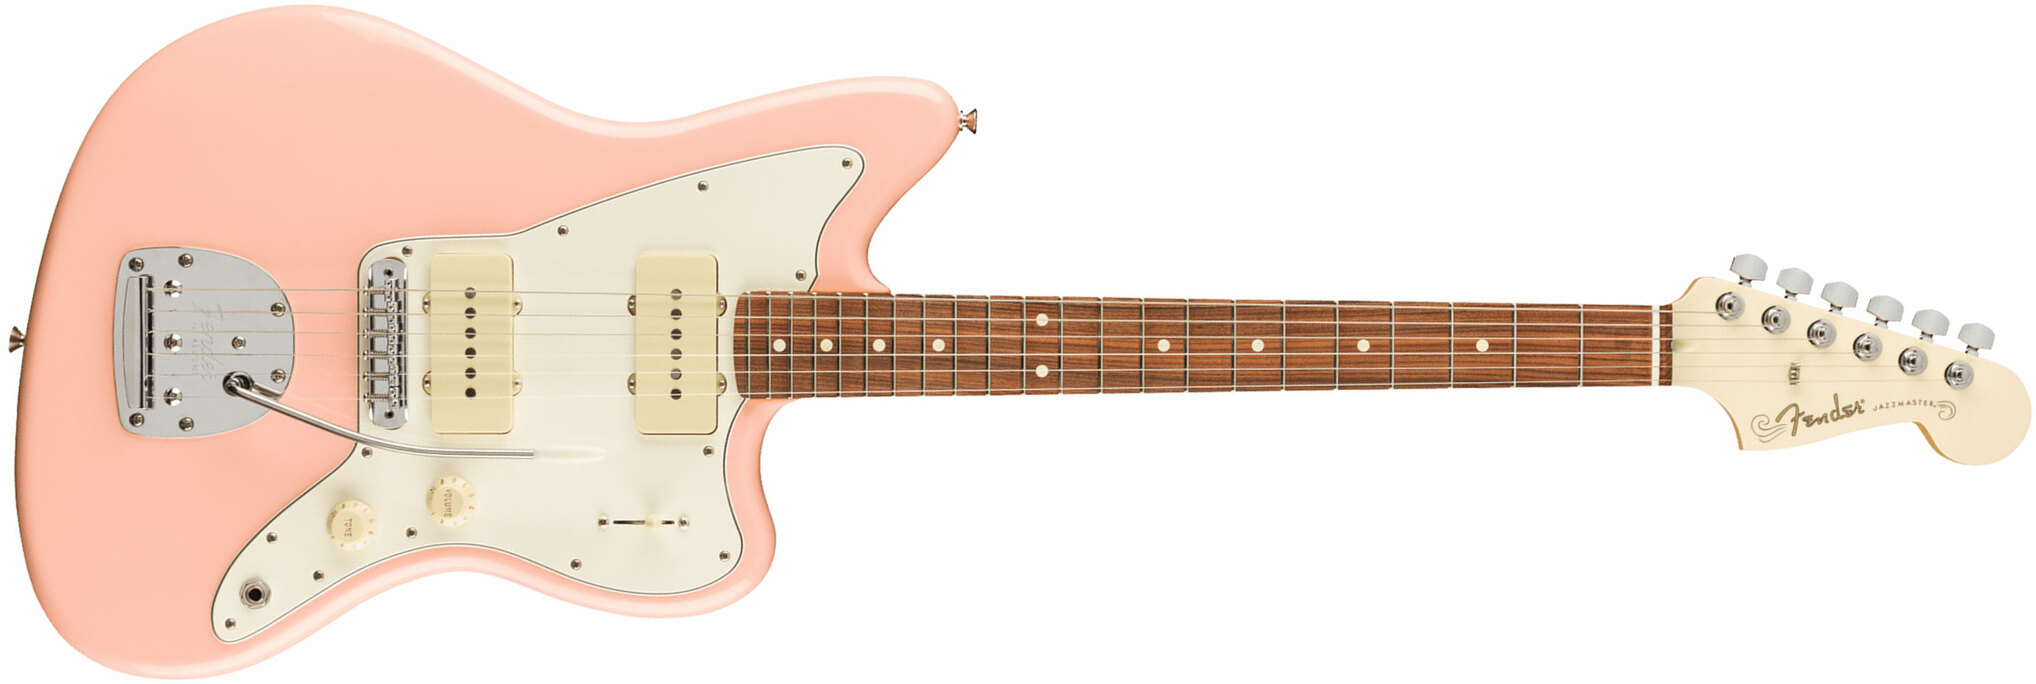 Fender Jazzmaster Player Ltd Mex 2s Trem Pf - Shell Pink - Retro-Rock-E-Gitarre - Main picture